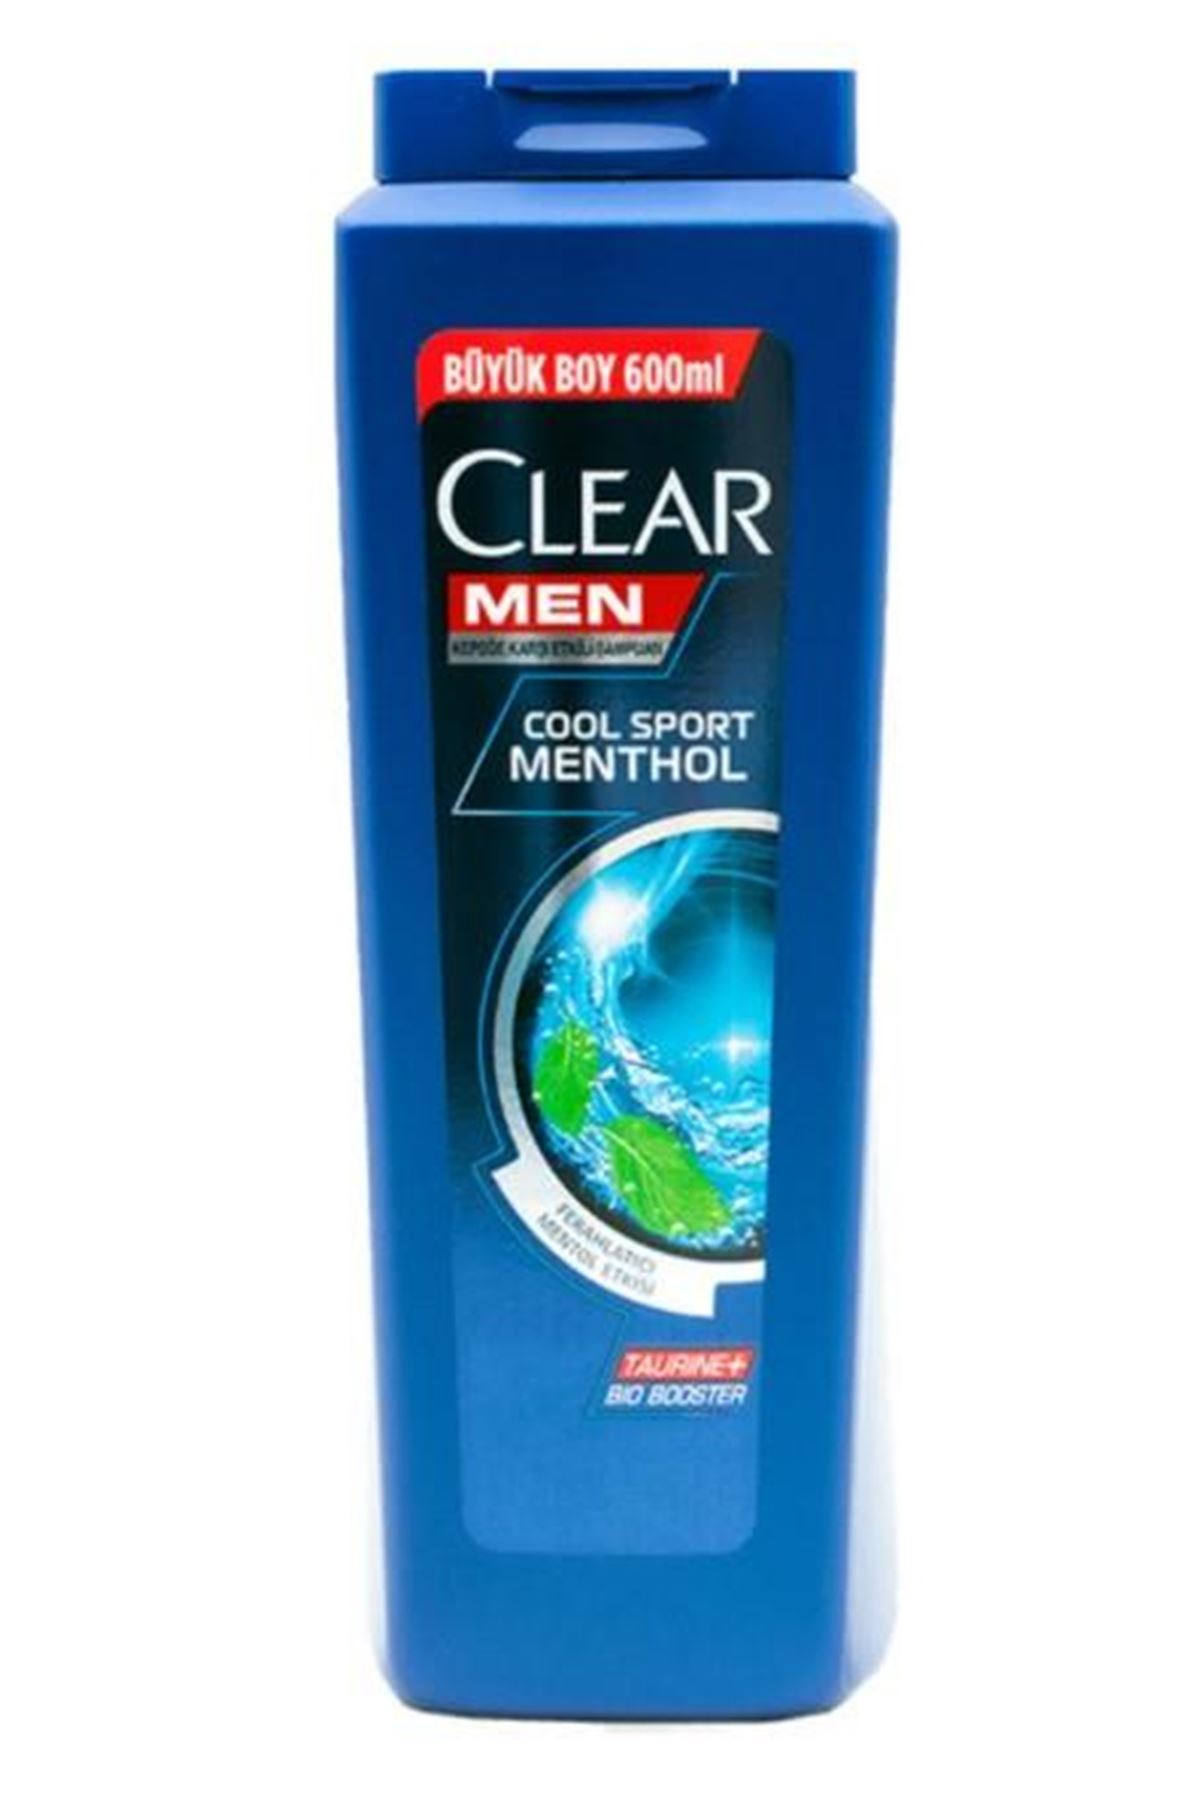 Clear Men Şampuan Cool Sport Menthol 600ml 586772